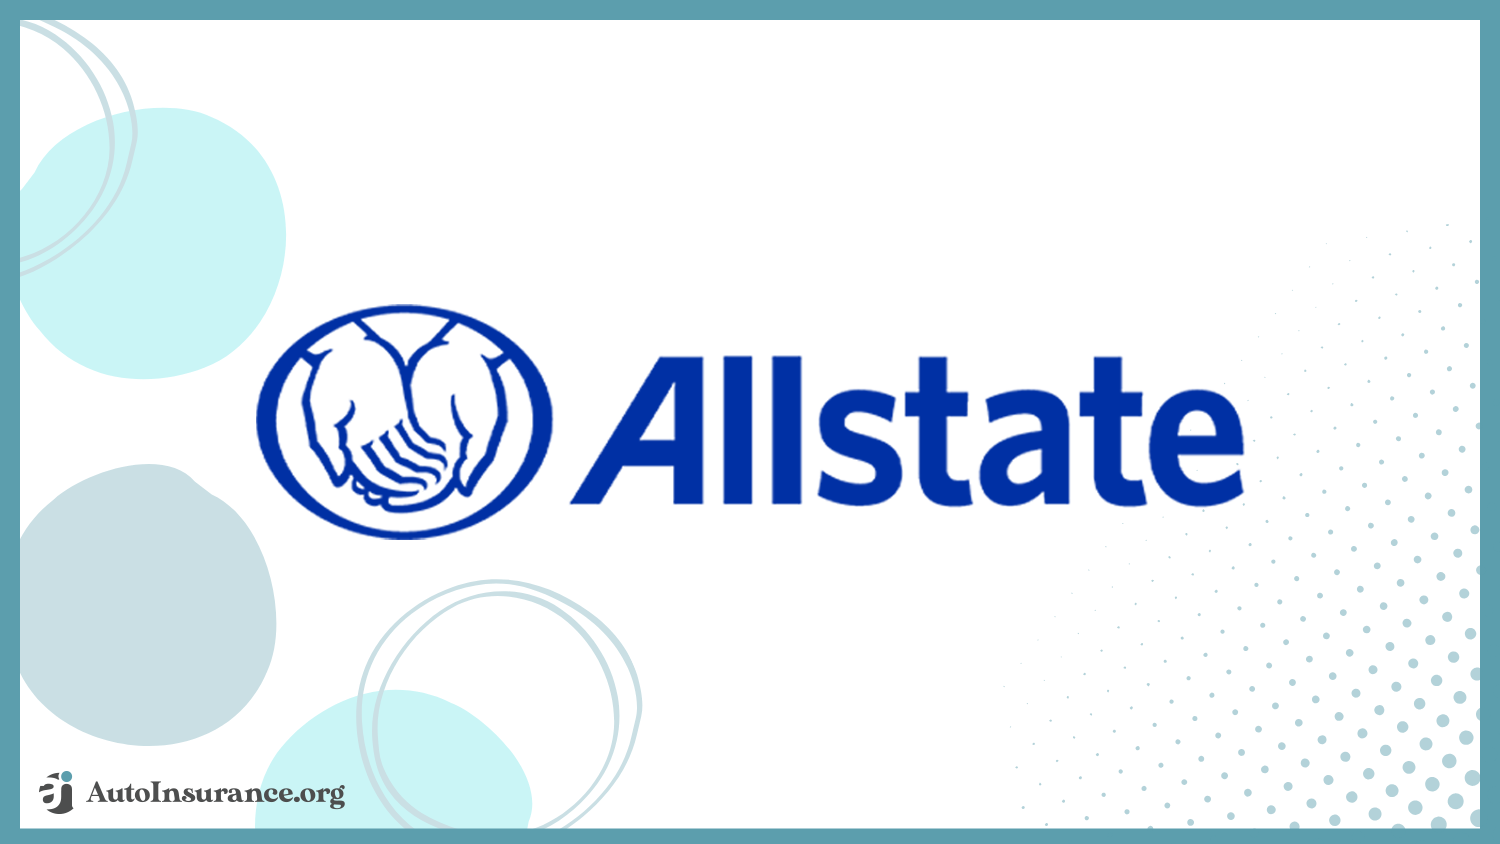 Allstate: Best Auto Insurance Companies for Women